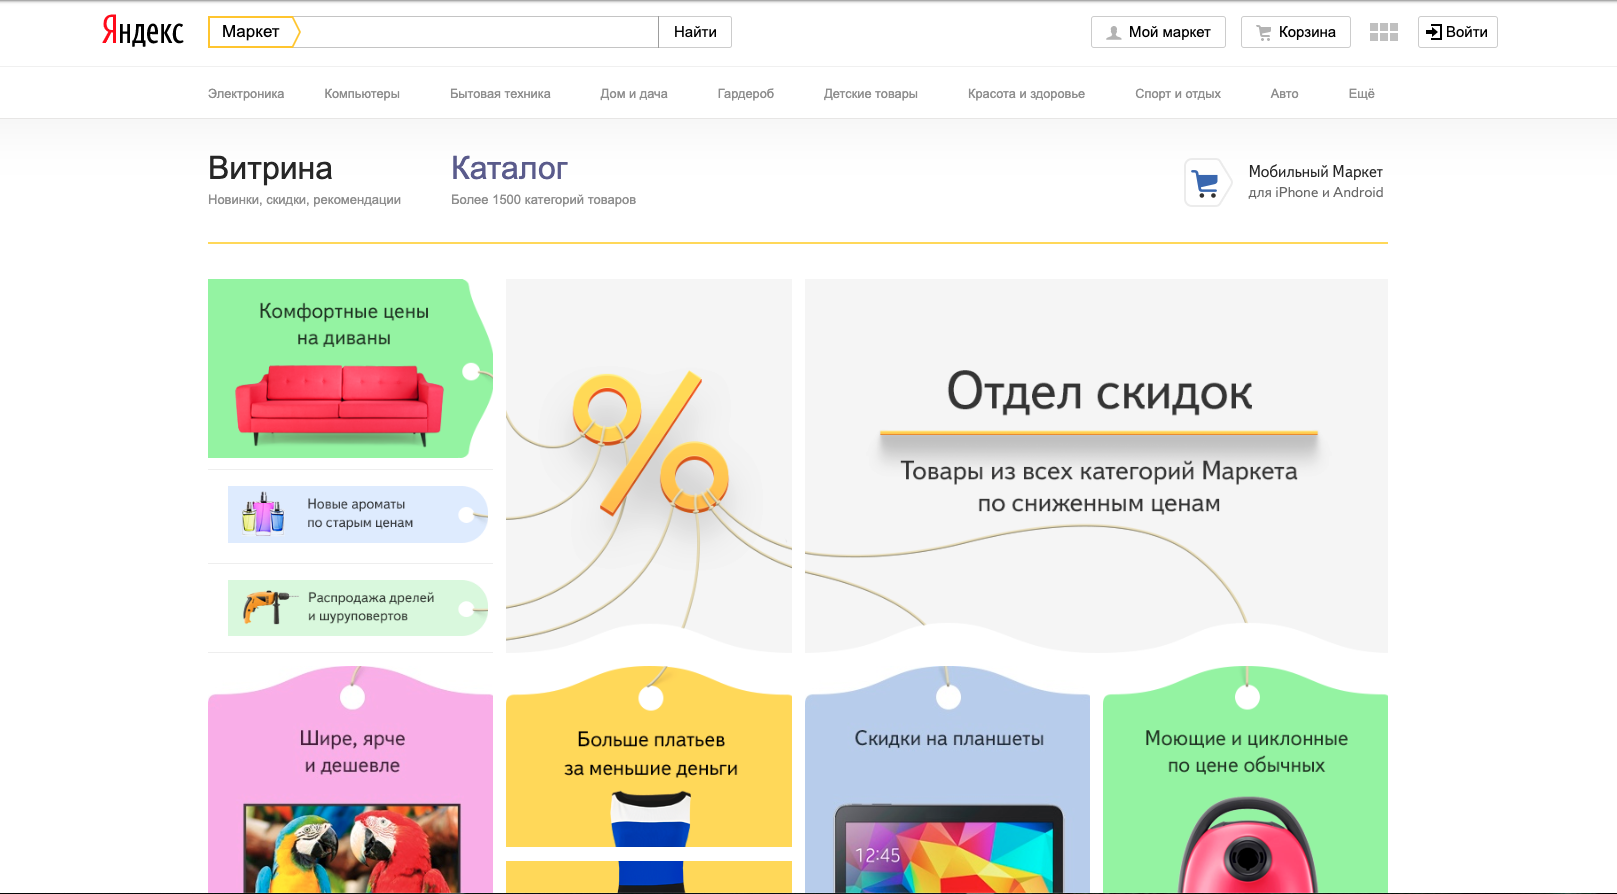 Главная страница Яндекс Маркет 2015 год